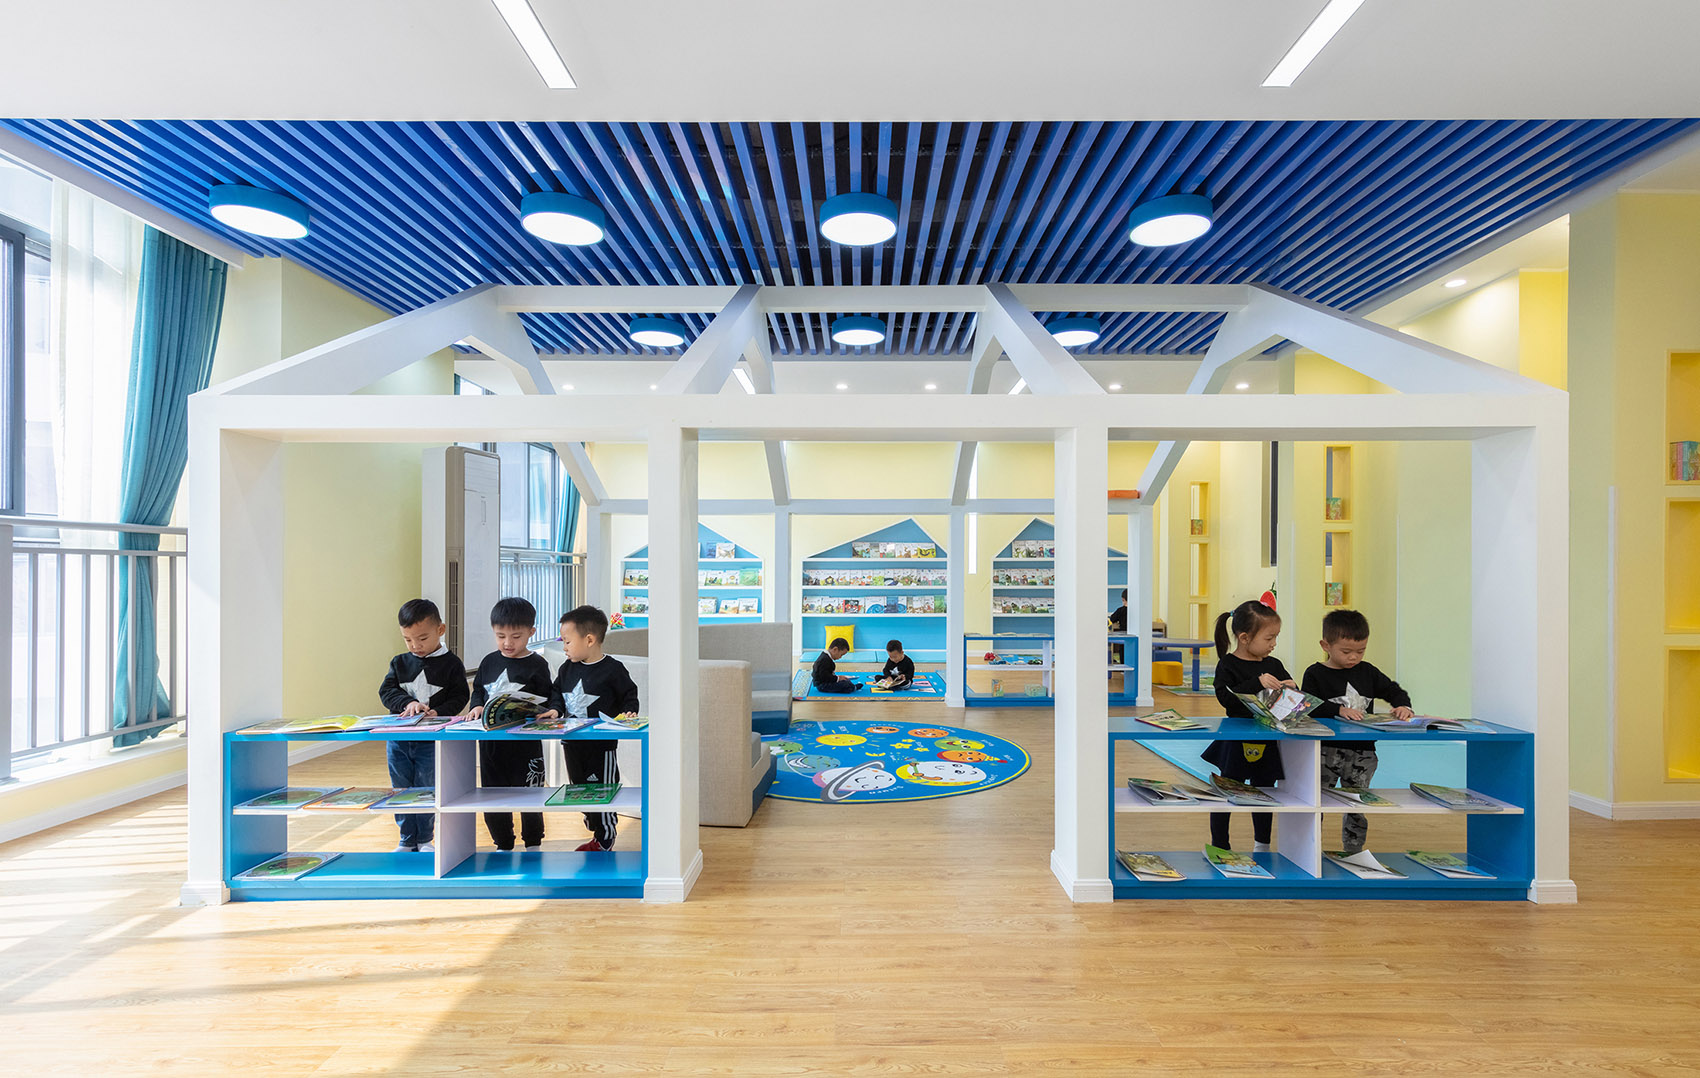 019-yy-terrace-school-ningbo-idea-kids-international-kindergarten-china-by-archgrid.jpg